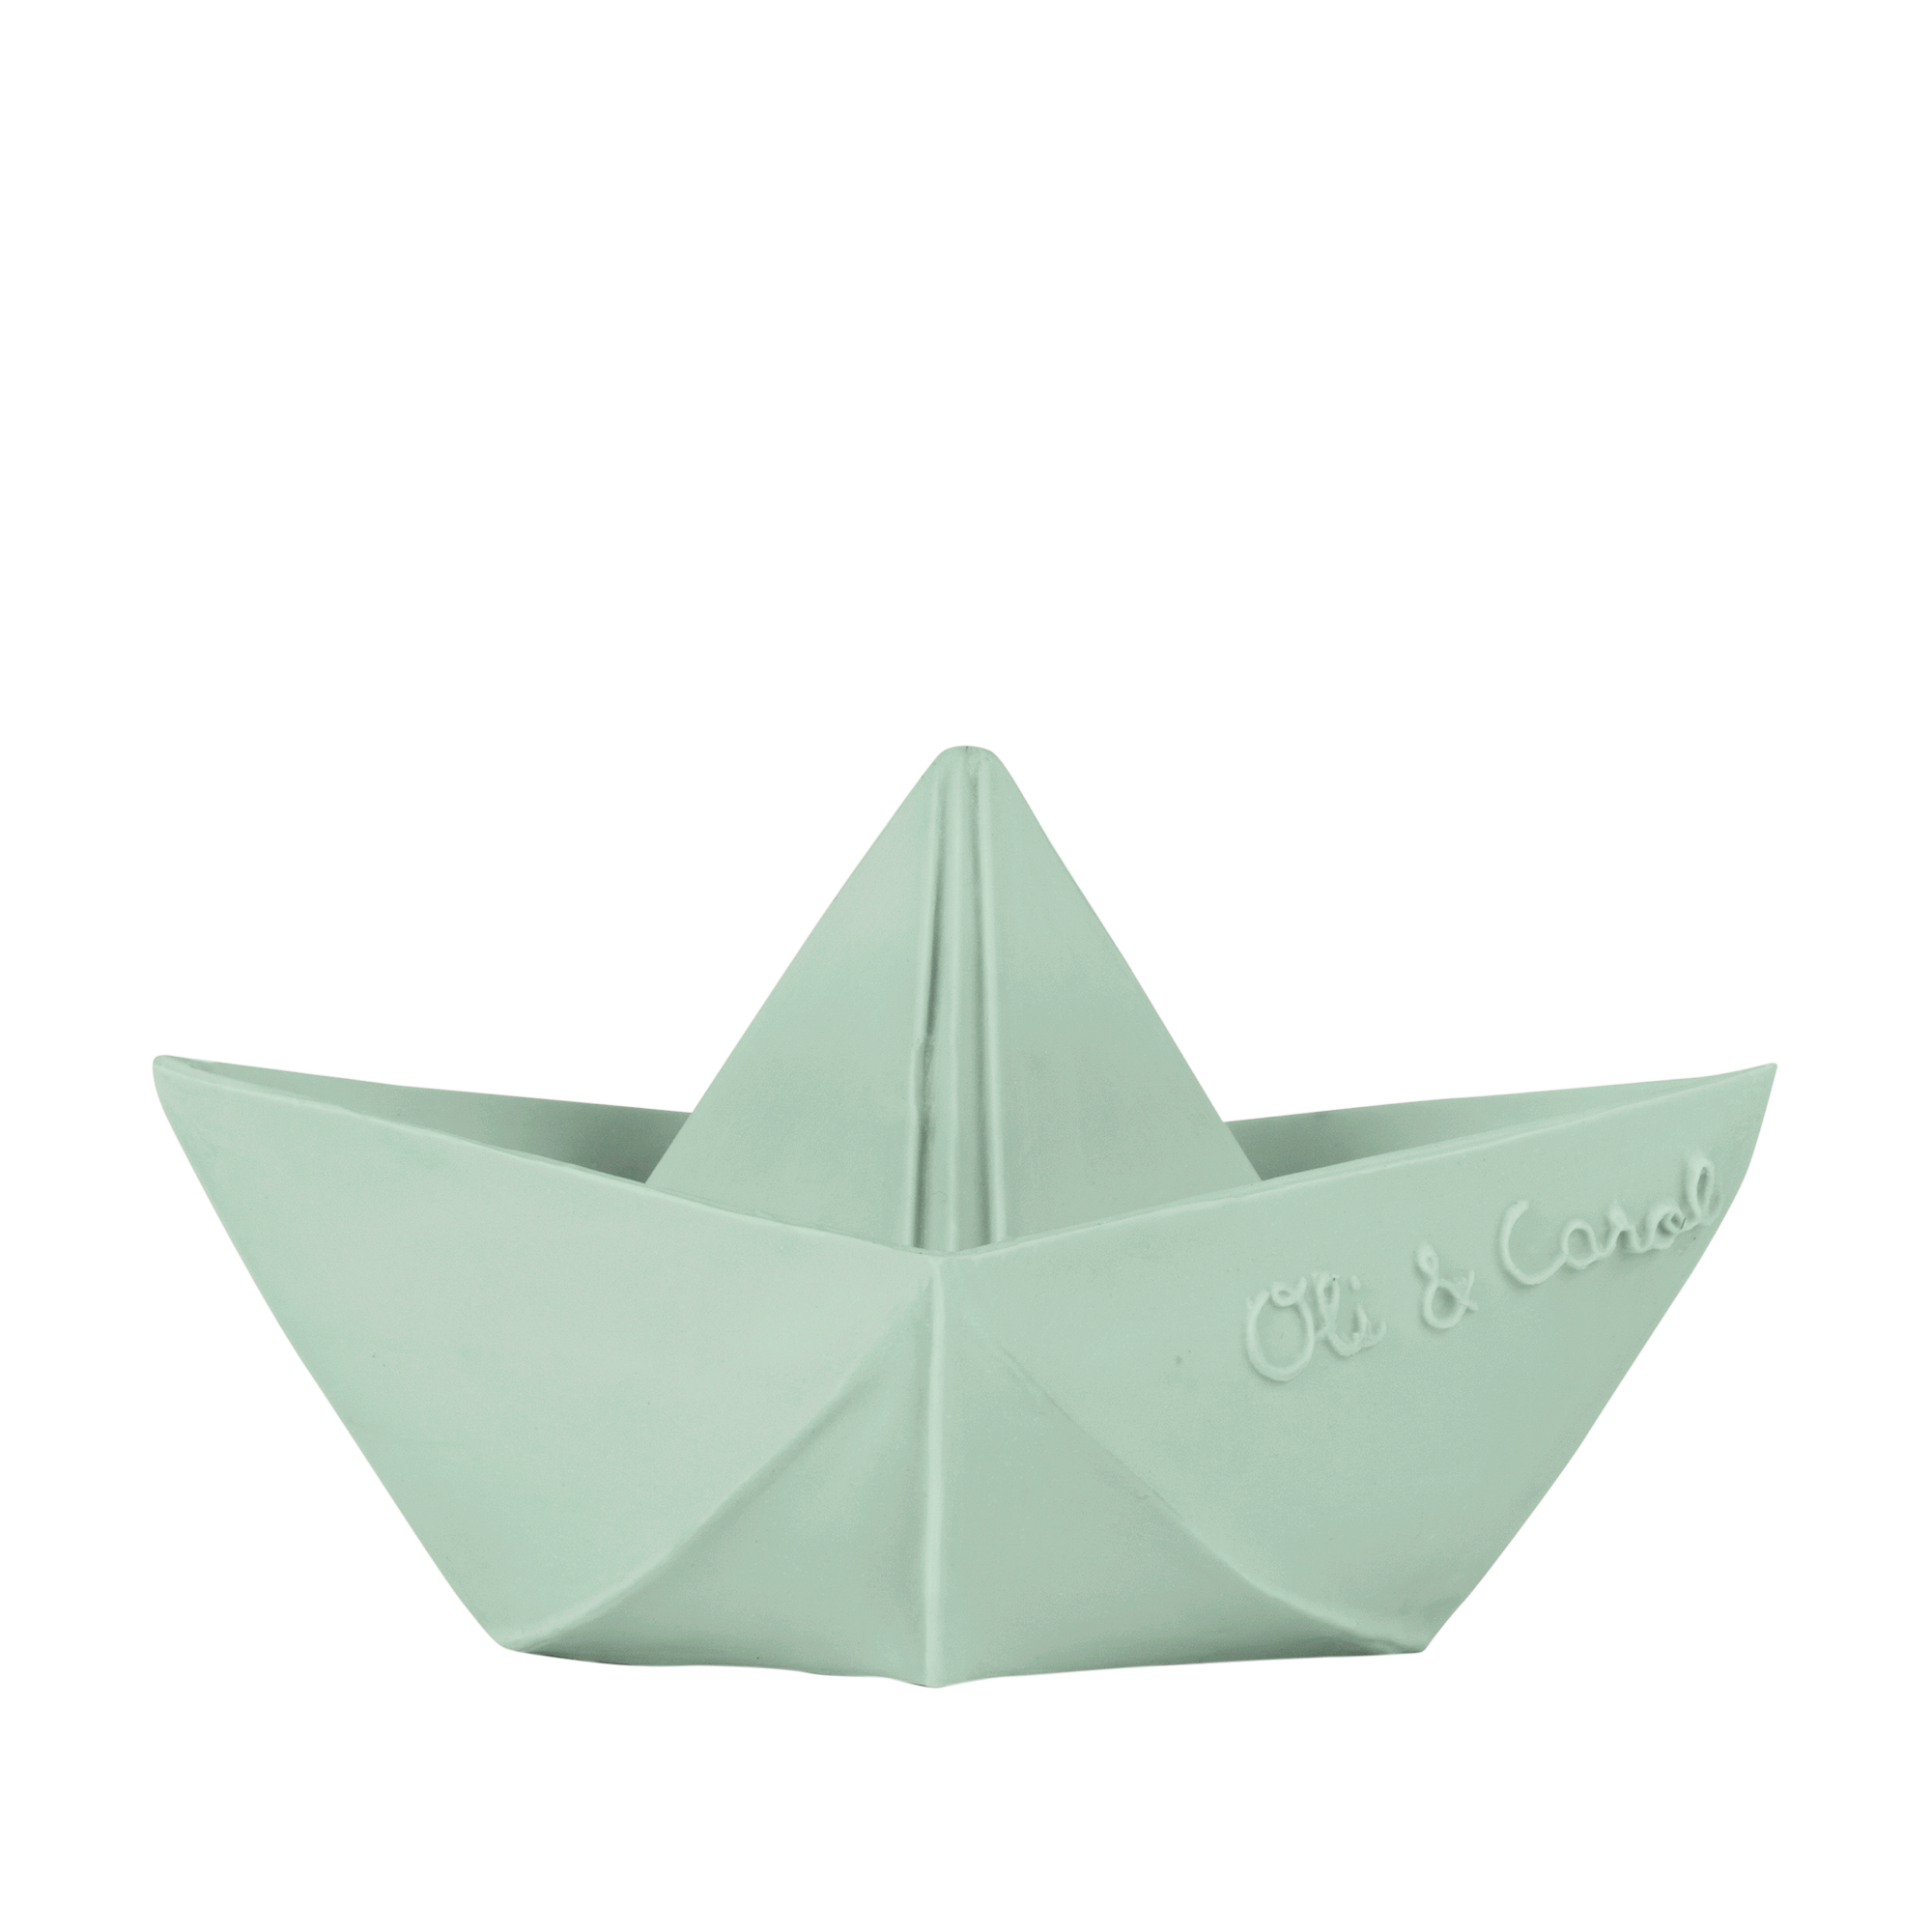 Beknopt vreemd Aangepaste Oli Origami Boat Oli & Carol | Alleen voor coole kinderen – Only for Cool  Kids